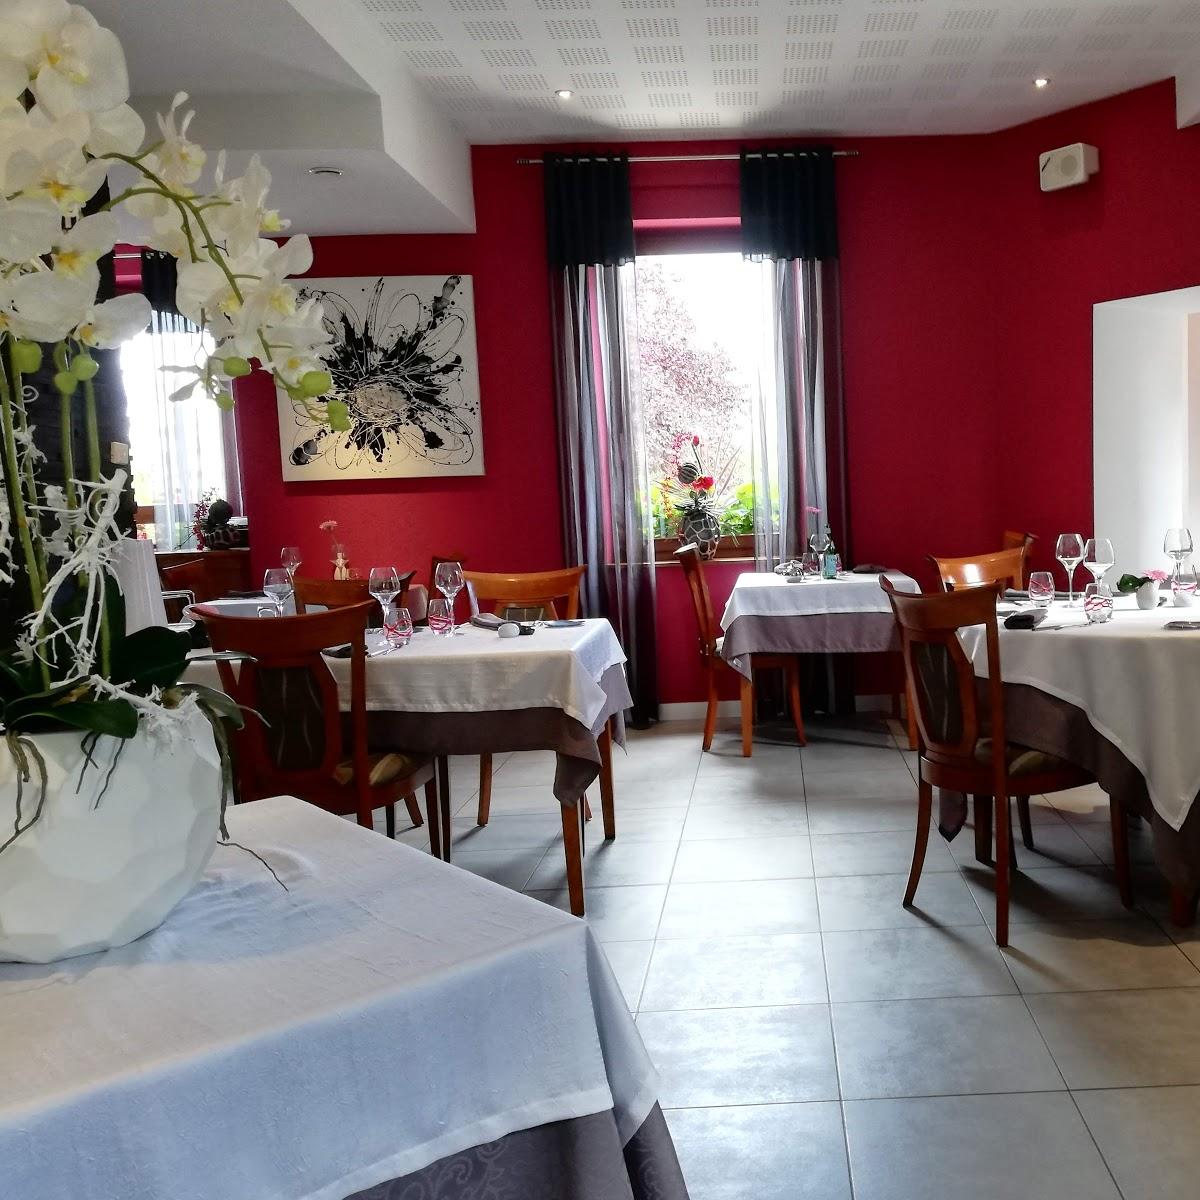 Restaurant "Restaurant Le Schlossberg" in Forbach